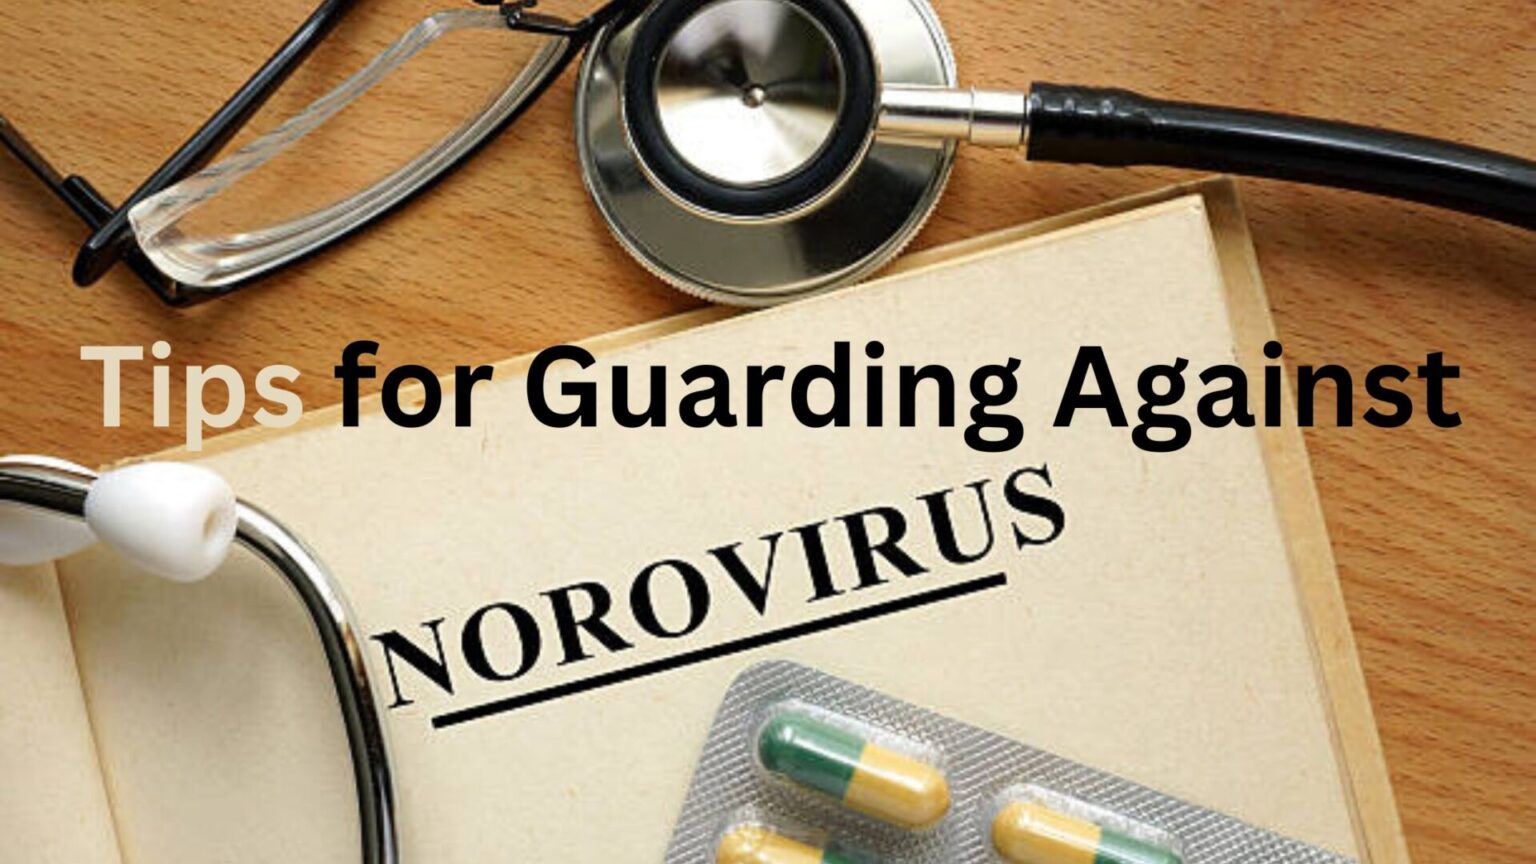 Tips for Guarding Against Norovirus